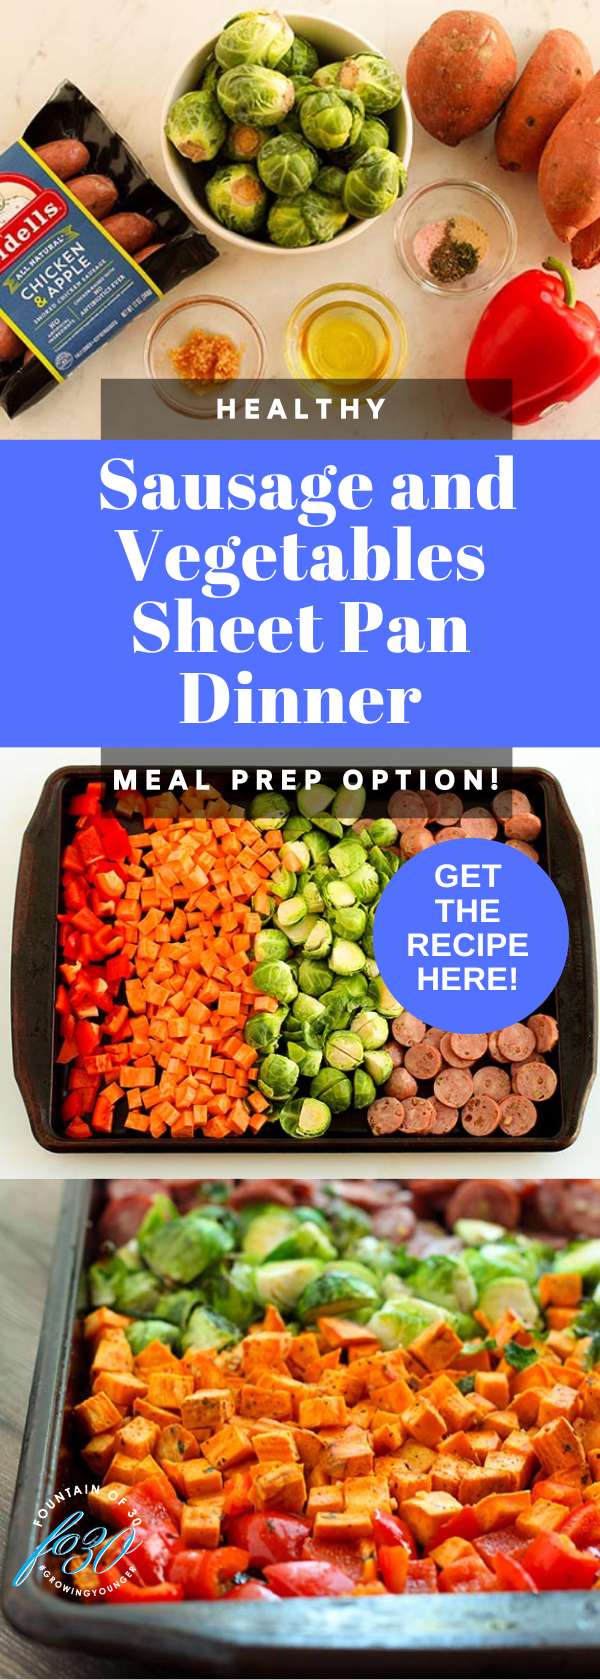 Healthy Sausage And Veggies Sheet Pan Dinner Easy Meal Prep Recipe 5501